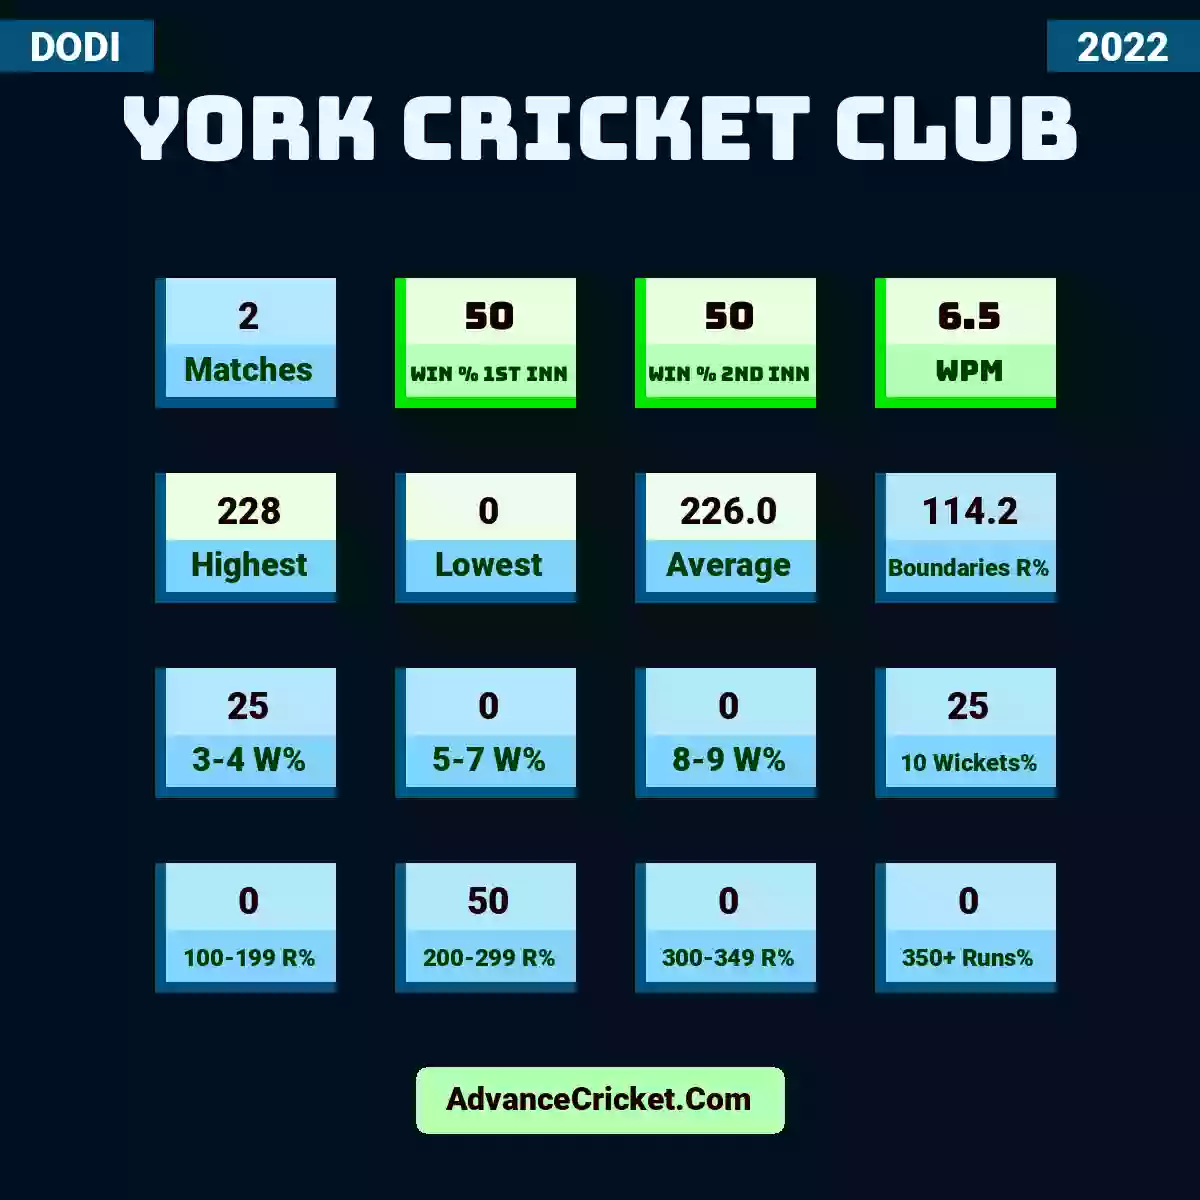 Image showing York Cricket Club with Matches: 2, Win % 1st Inn: 50, Win % 2nd Inn: 50, WPM: 6.5, Highest: 228, Lowest: 0, Average: 226.0, Boundaries R%: 114.2, 3-4 W%: 25, 5-7 W%: 0, 8-9 W%: 0, 10 Wickets%: 25, 100-199 R%: 0, 200-299 R%: 50, 300-349 R%: 0, 350+ Runs%: 0.